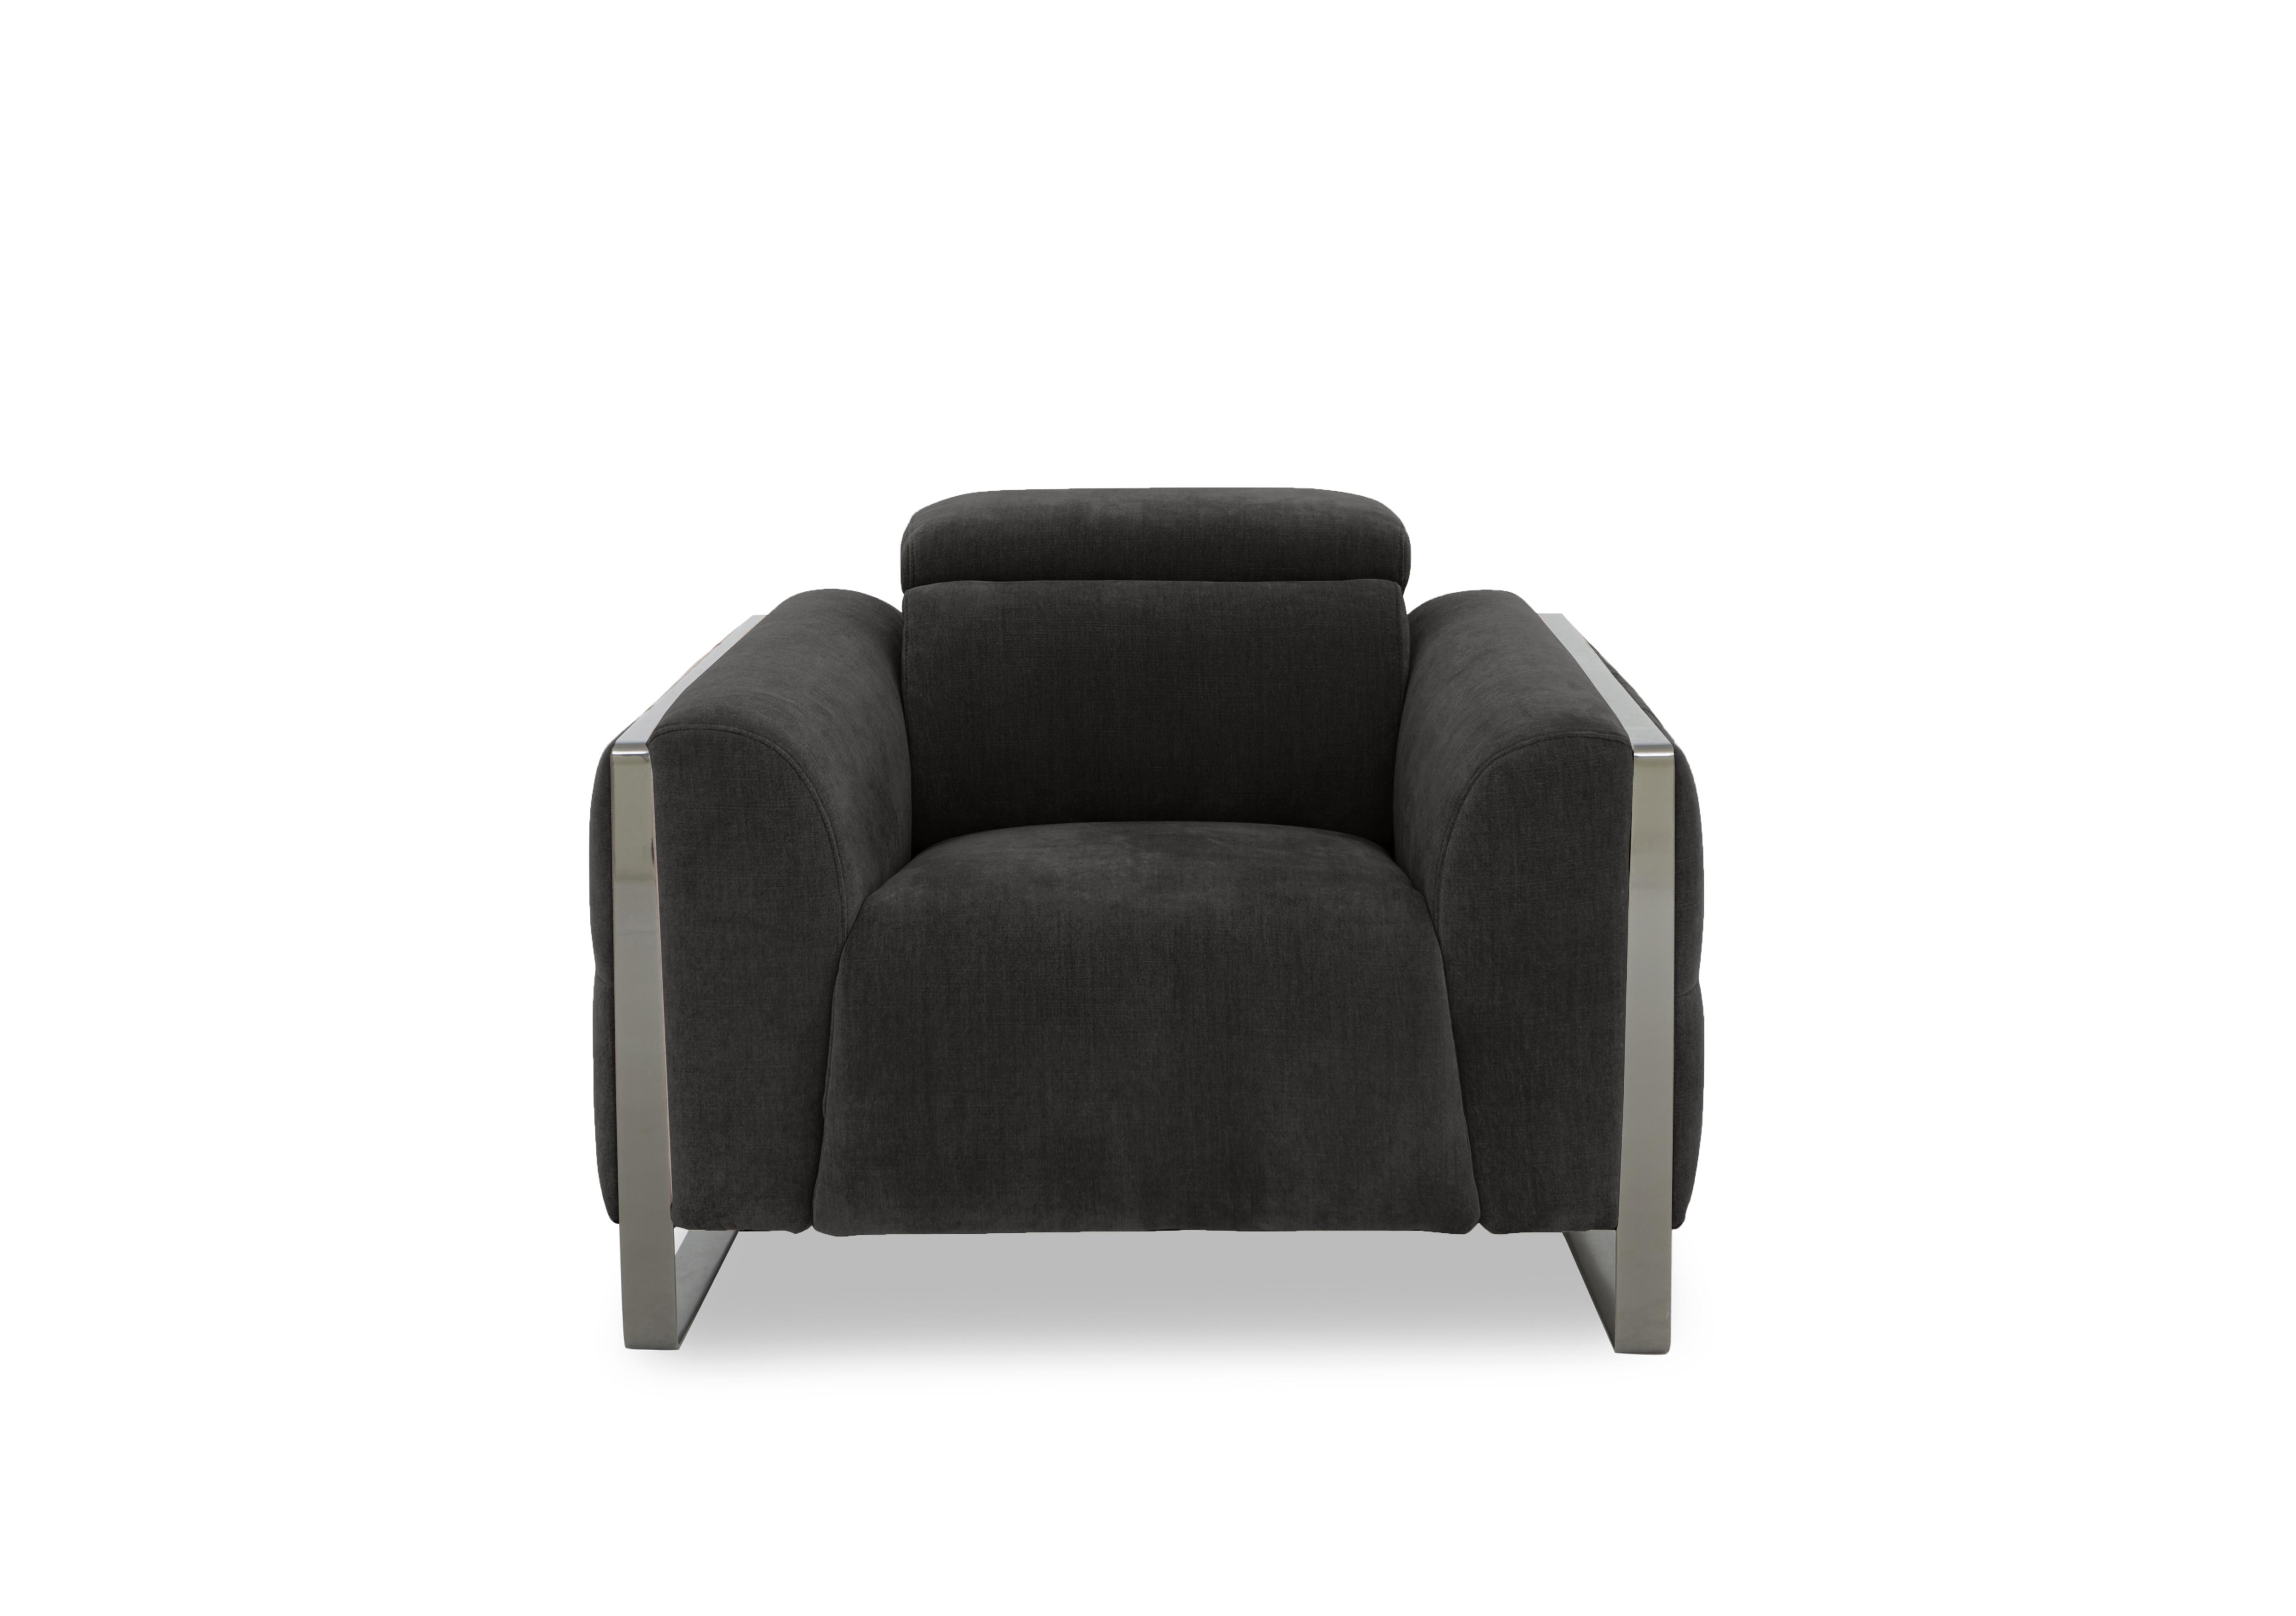 Gisella Fabric Chair in Manhattan Indigo 58009 on Furniture Village